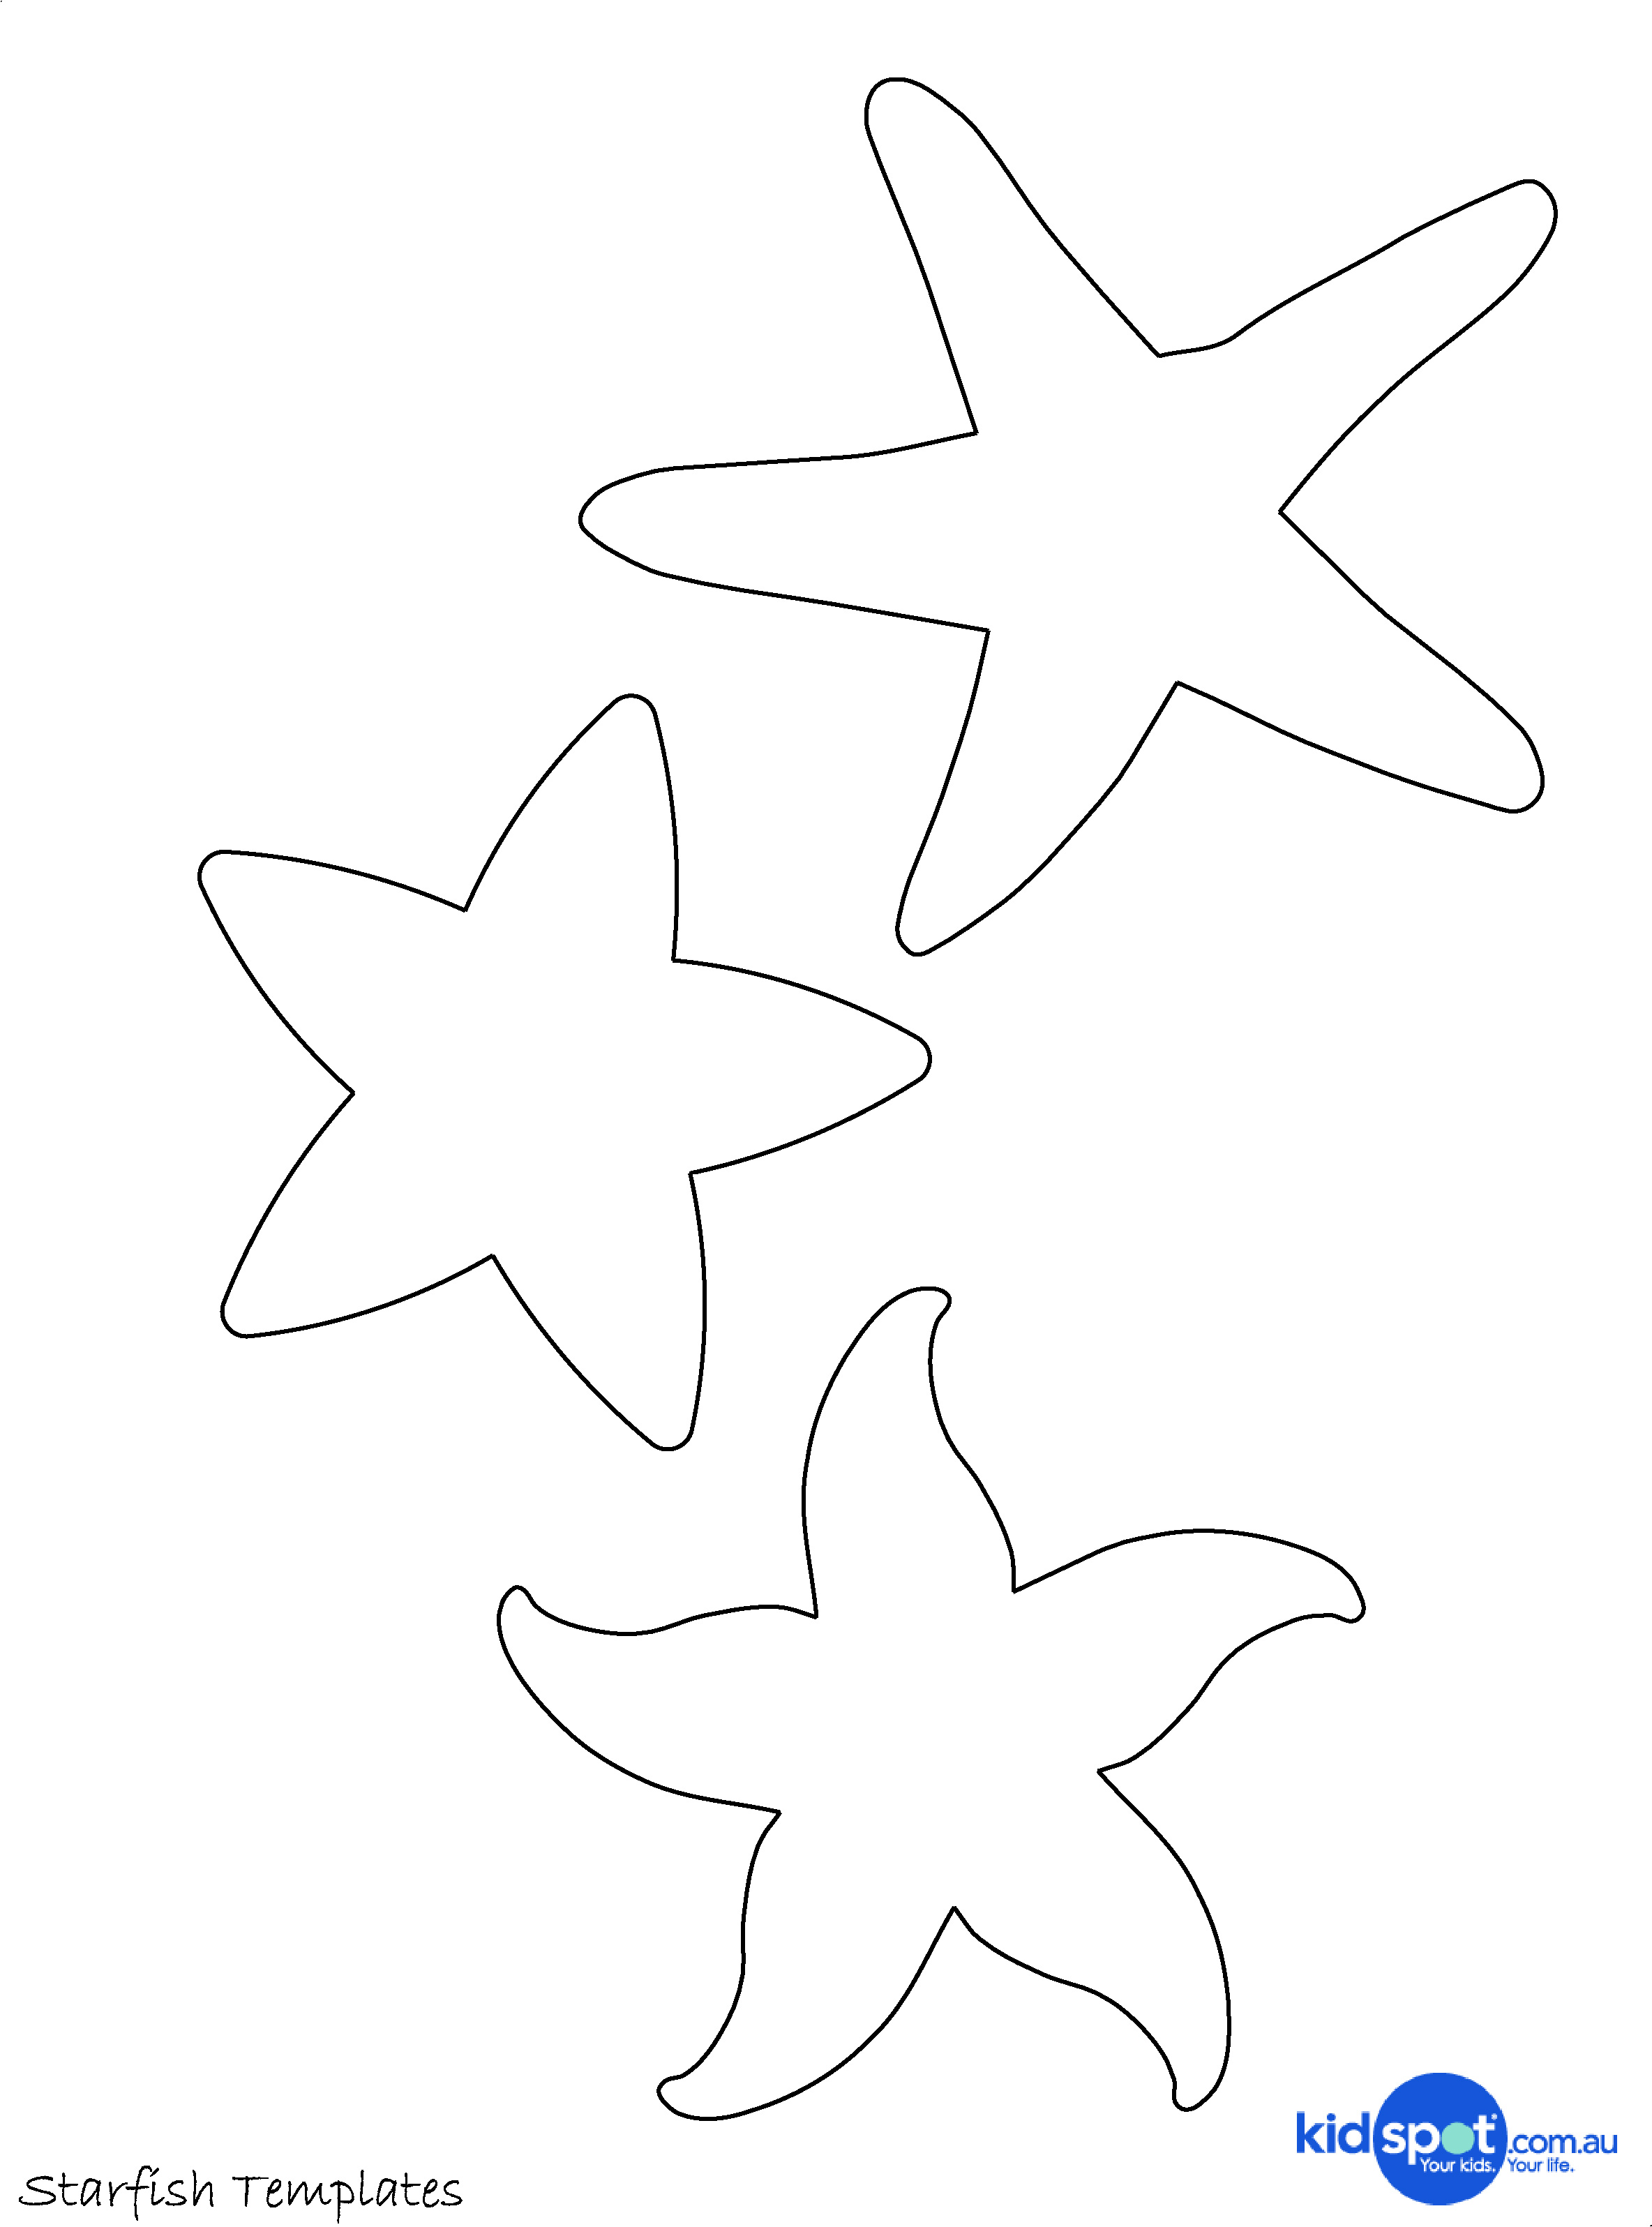 Starfish outline templates